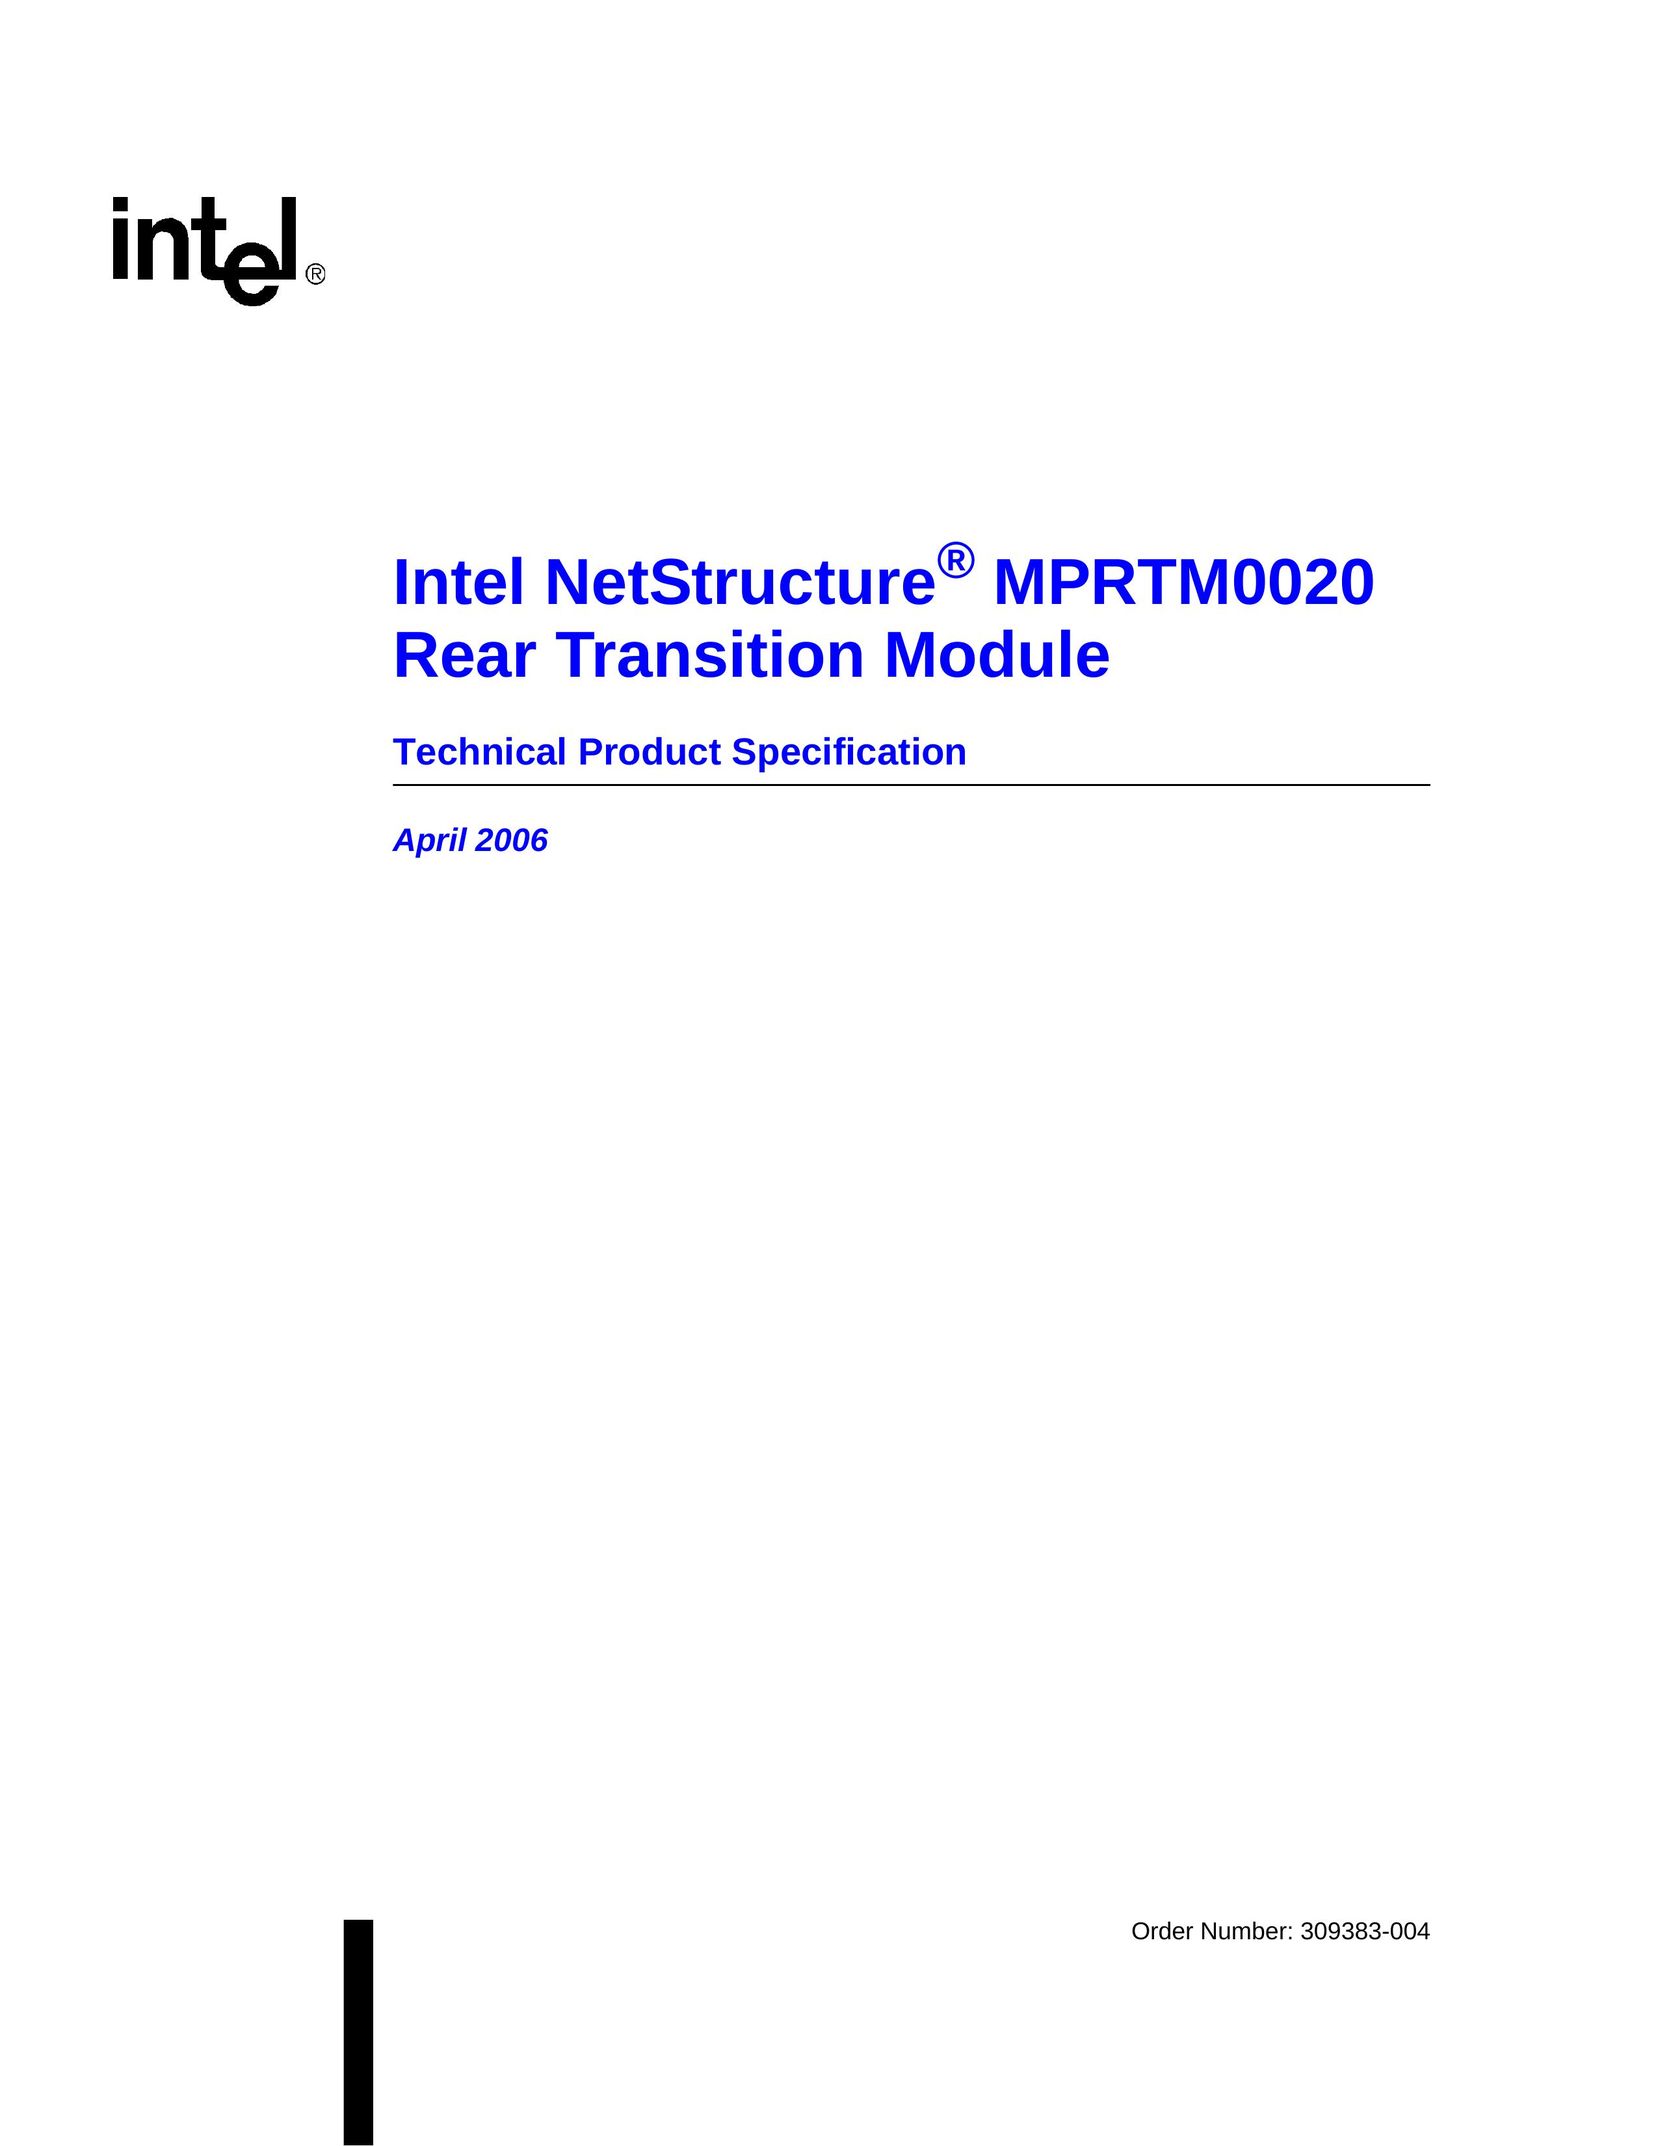 Intel Netstructure MPRTM0020 Rear Transition module Model Vehicle User Manual